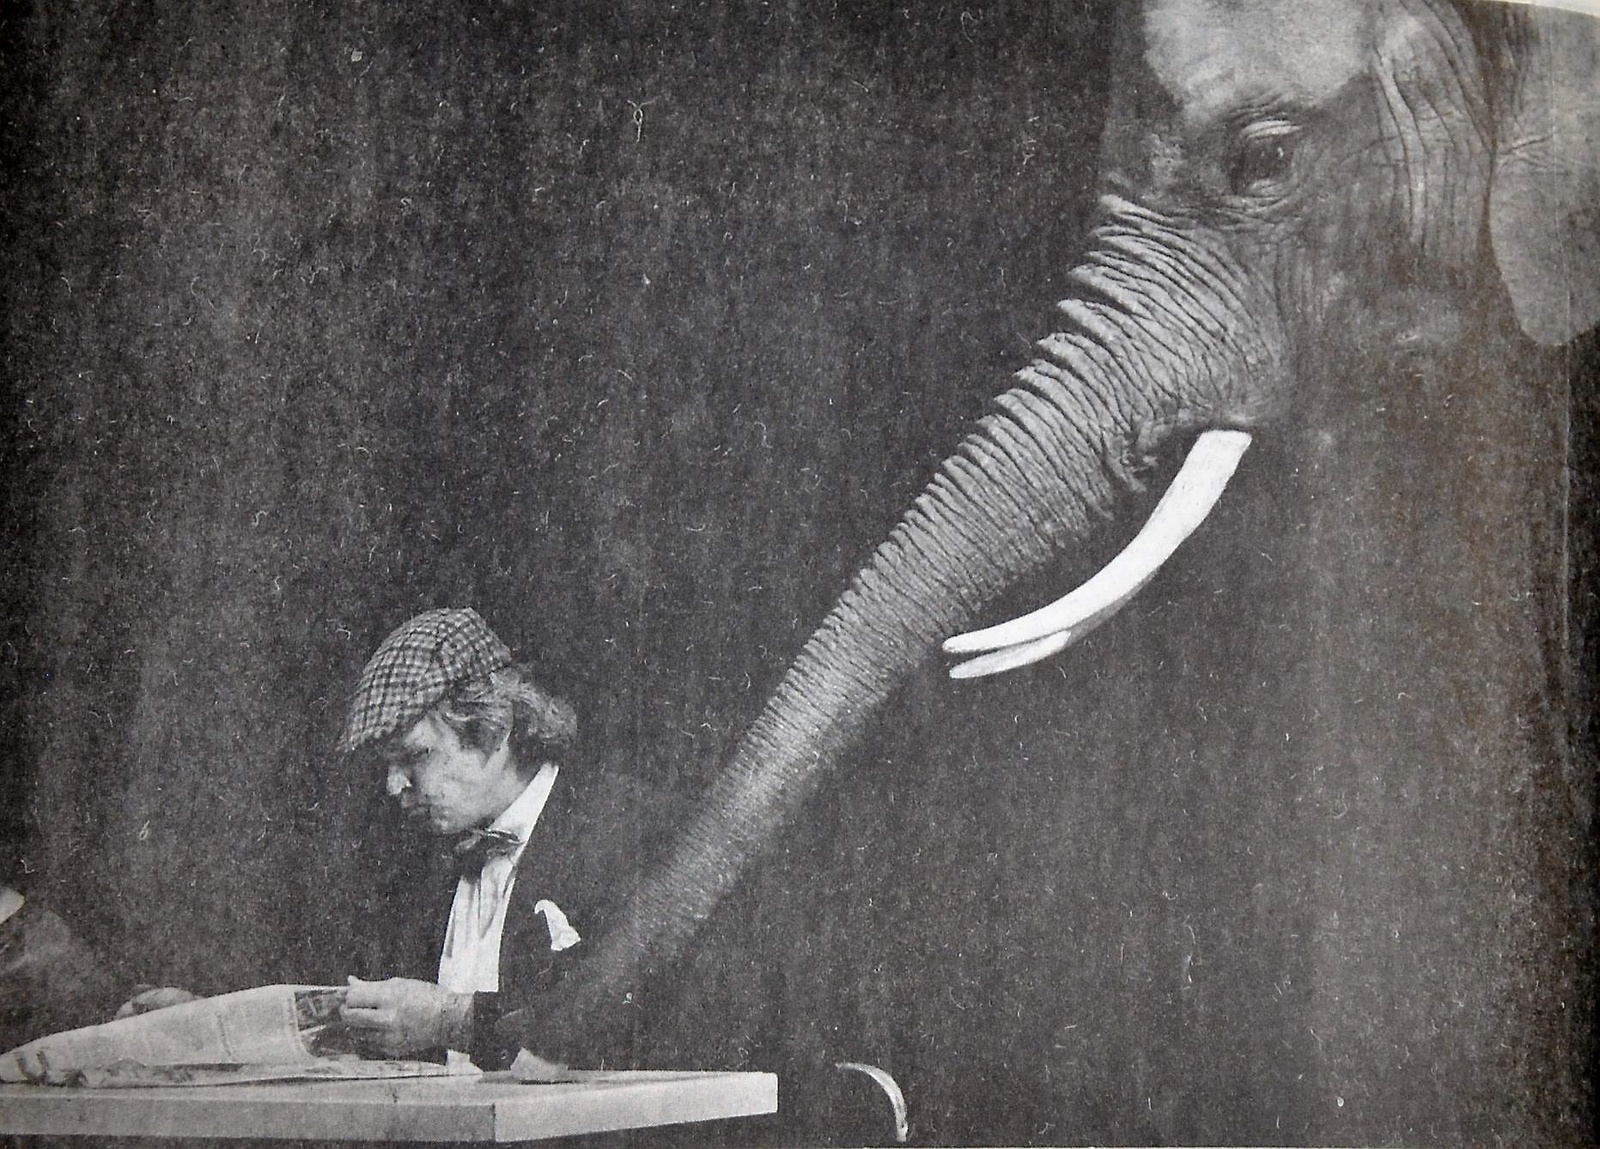 Ett och annat spratt spelade denna elefant Wendel Huber.
Arkiv: Gugge Nilsson